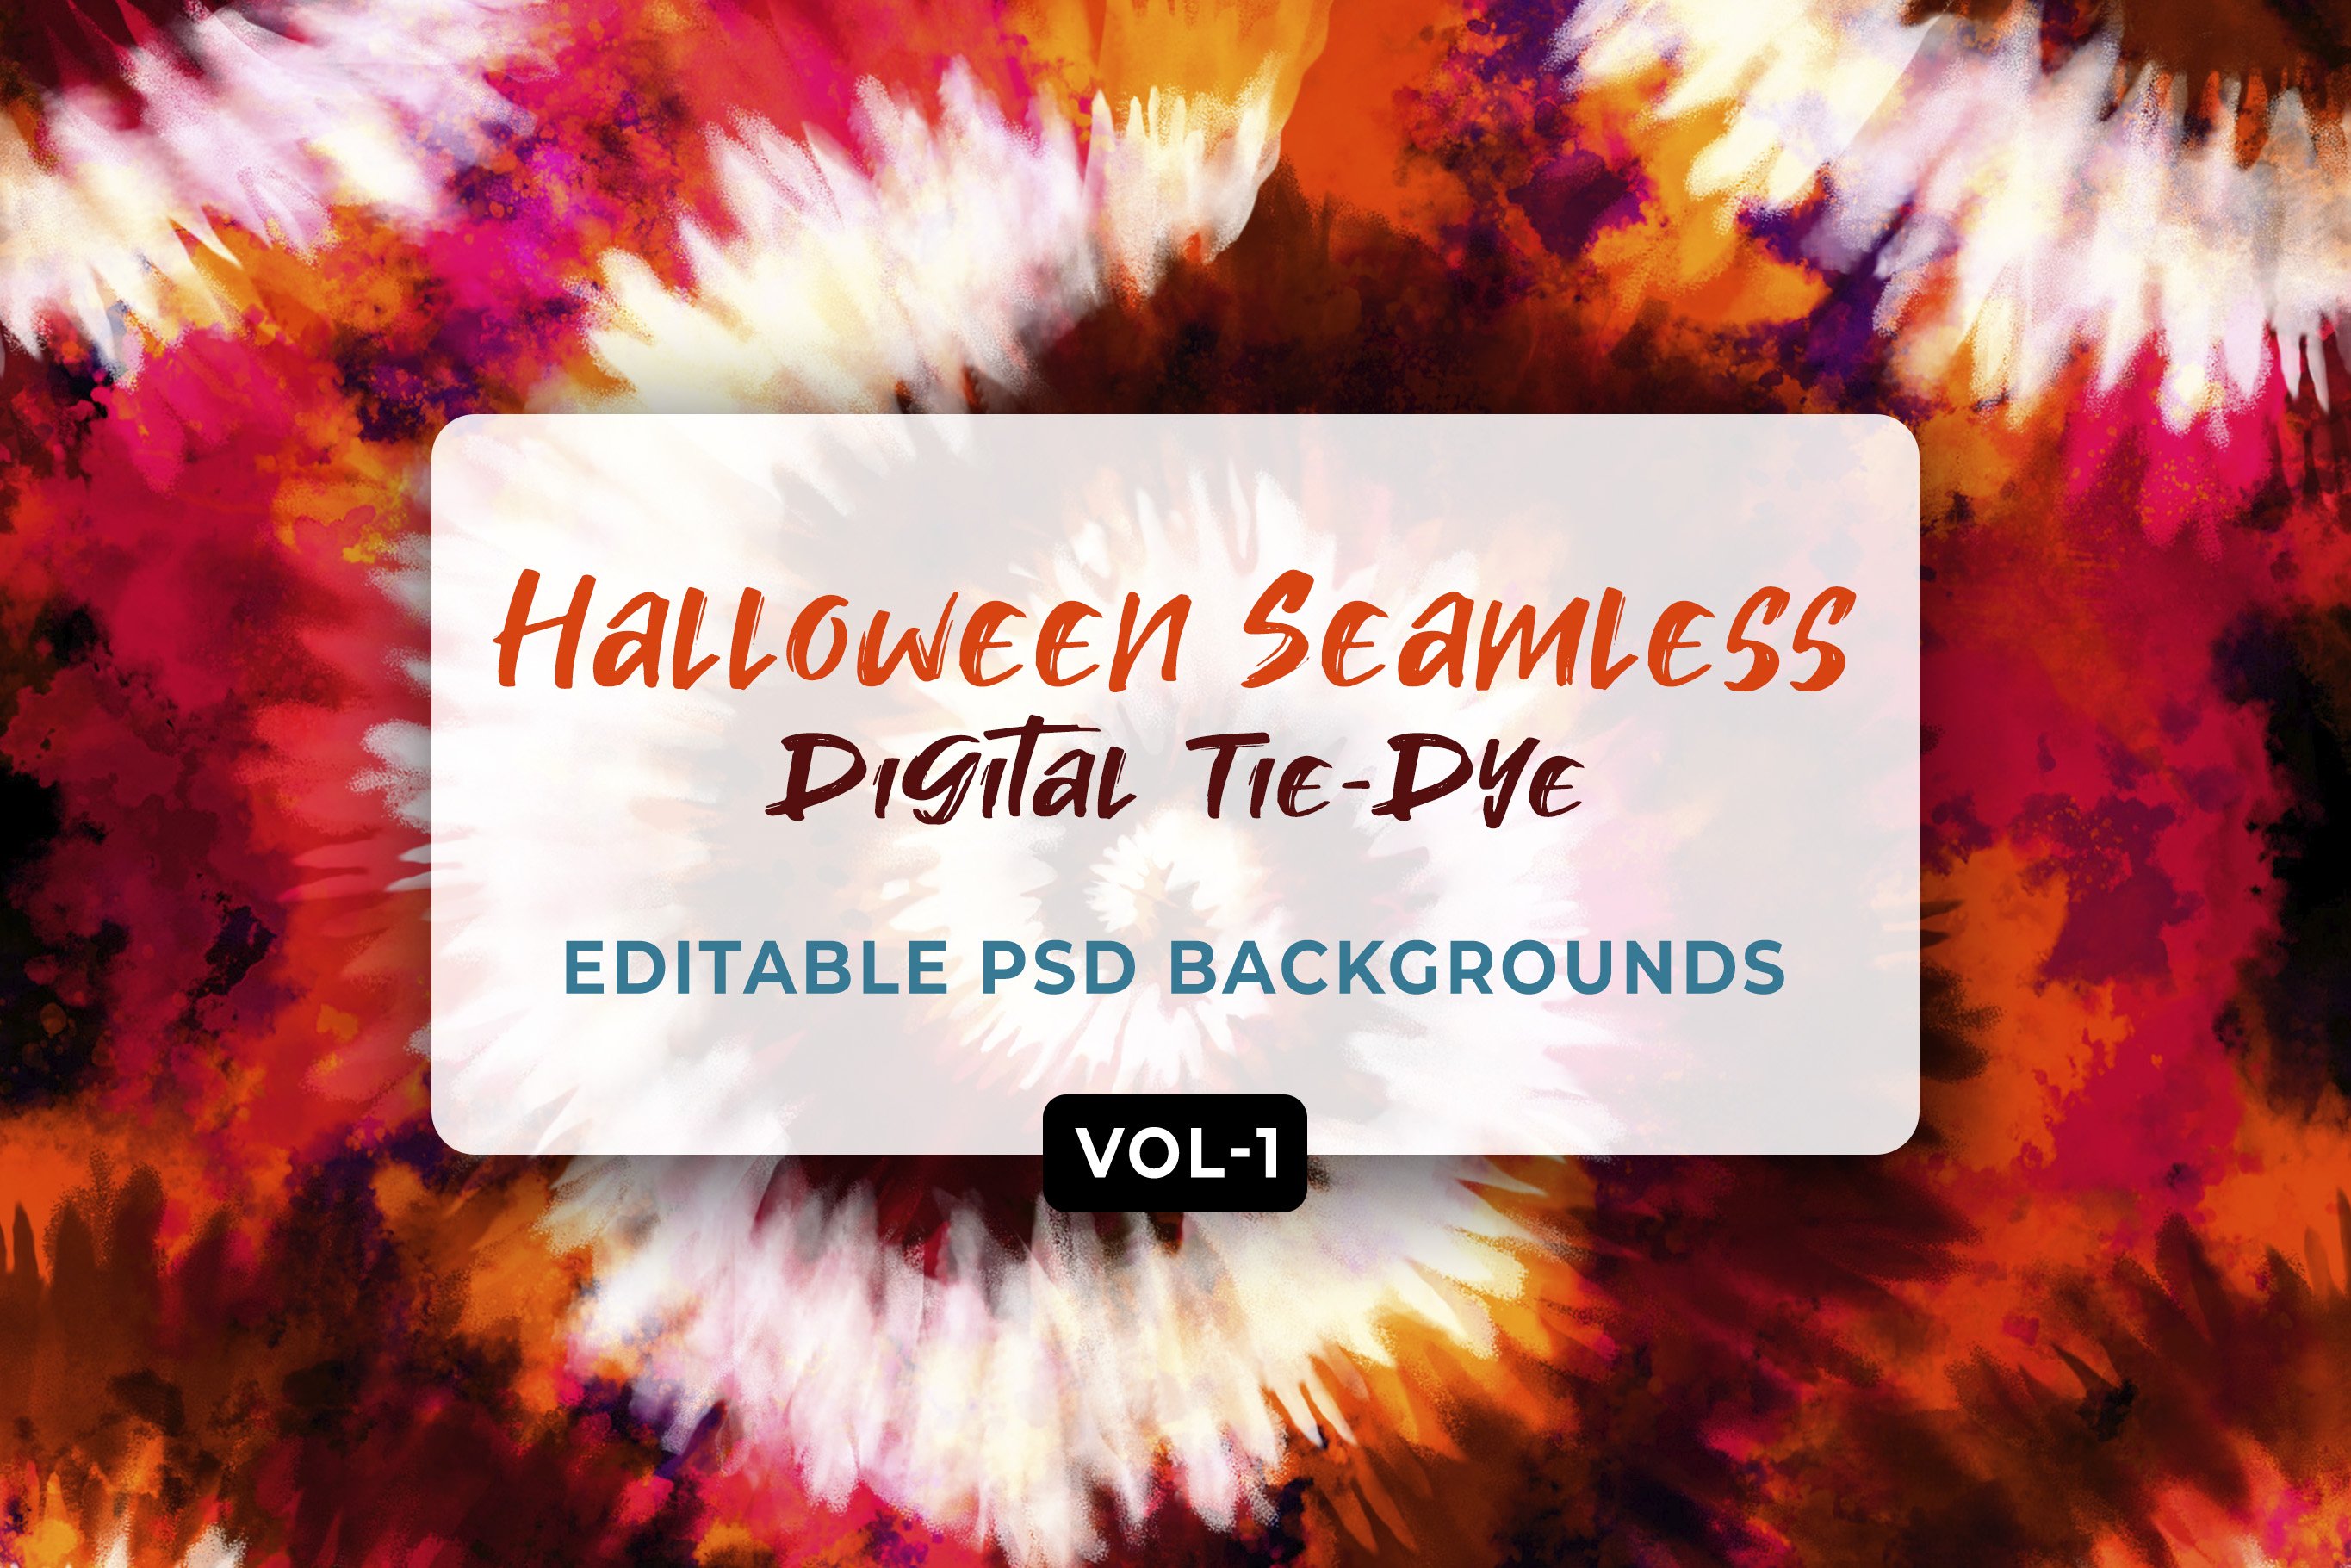 Halloween Seamless Digital Tie-Dye cover image.